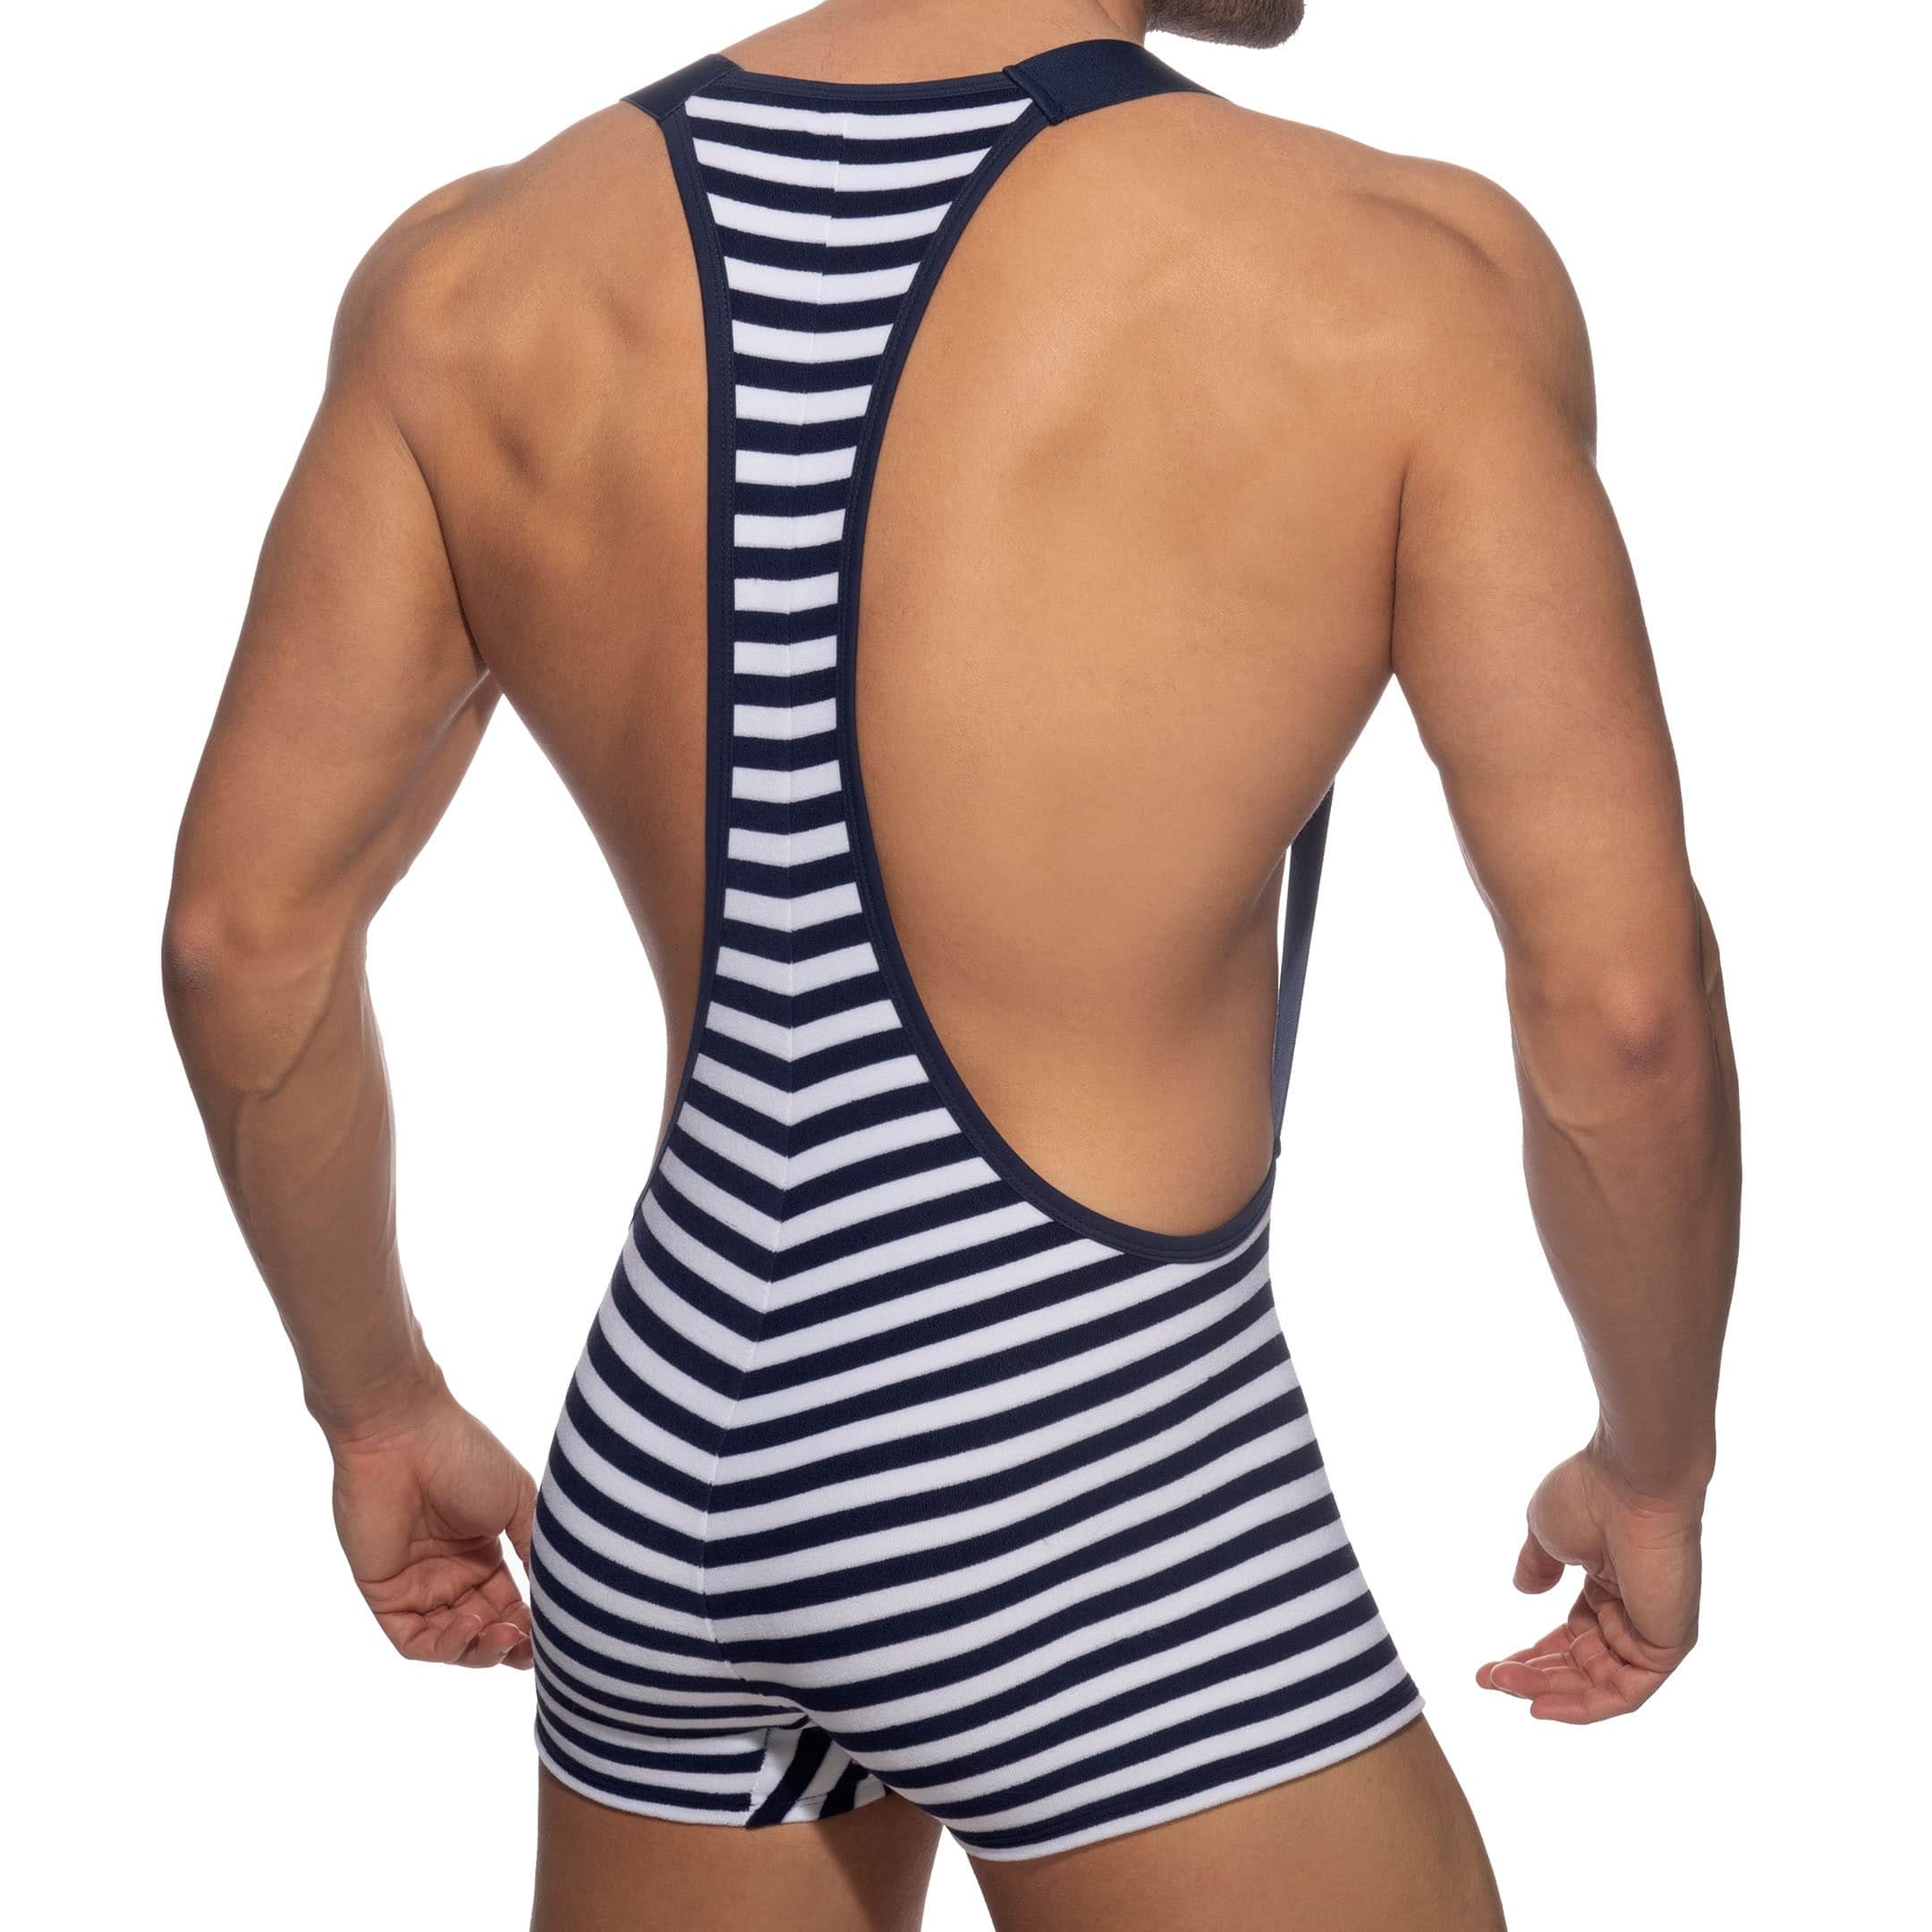 Curio Navy Seamless Bodysuit  Men's seamless Wrestling singlet Bodysuit